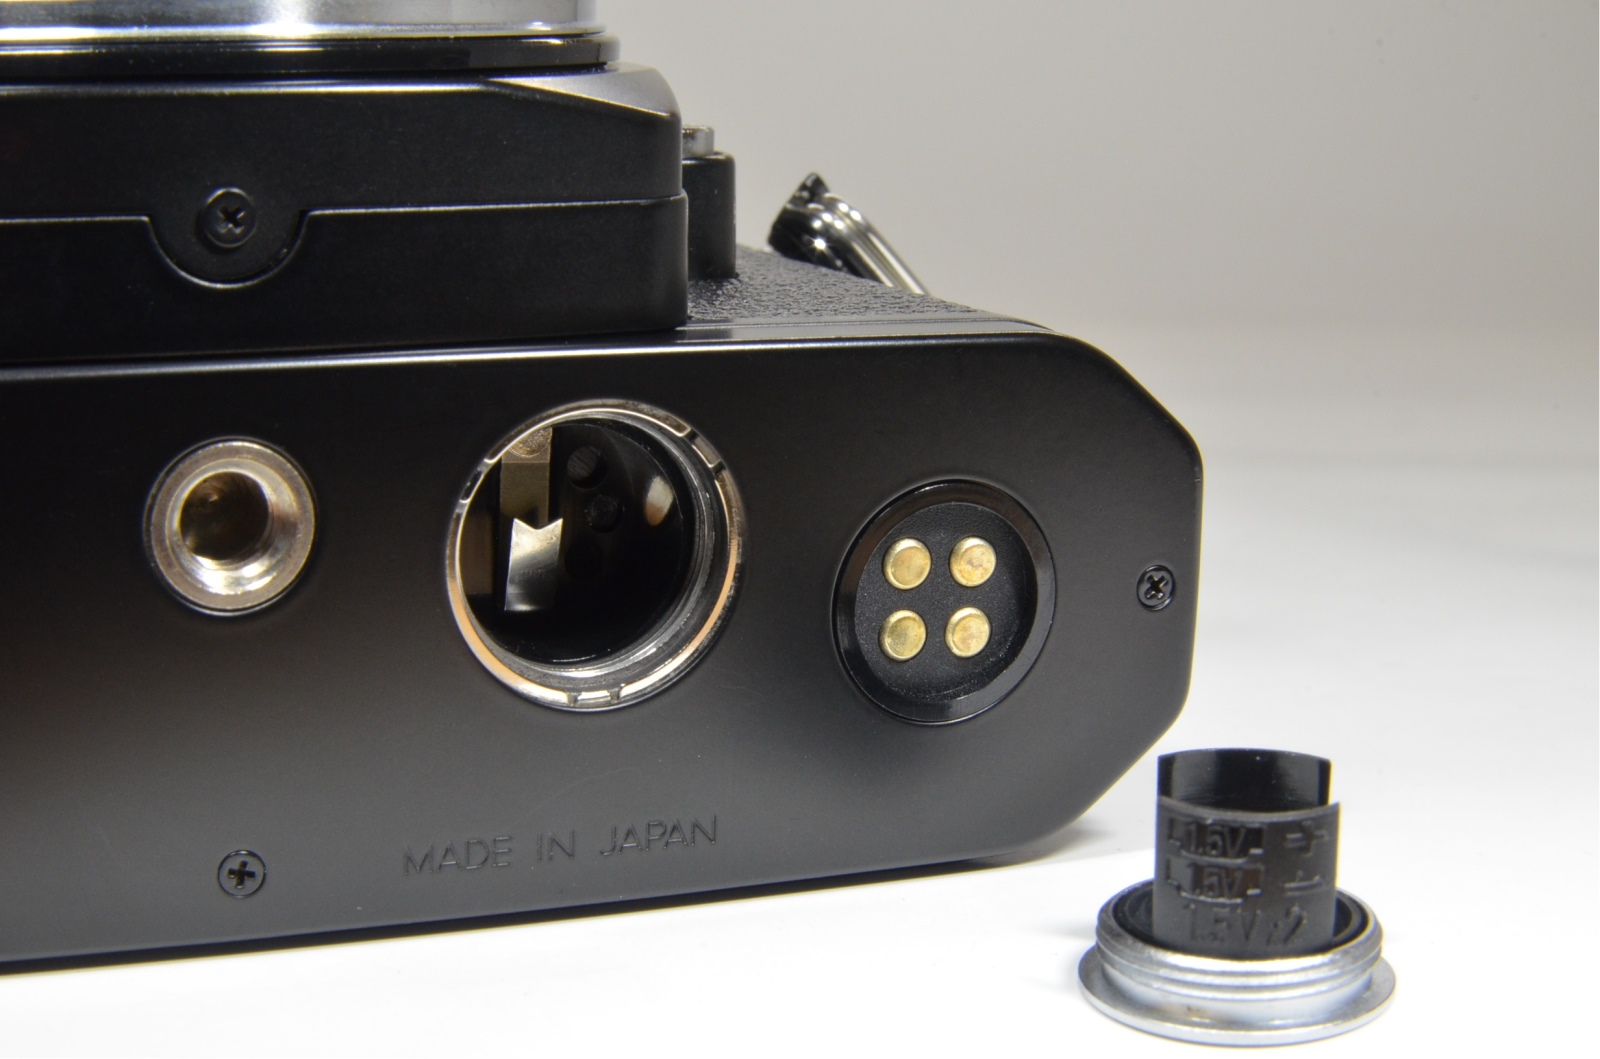 nikon fm3a 35mm film camera black boxed with cf-27s full case